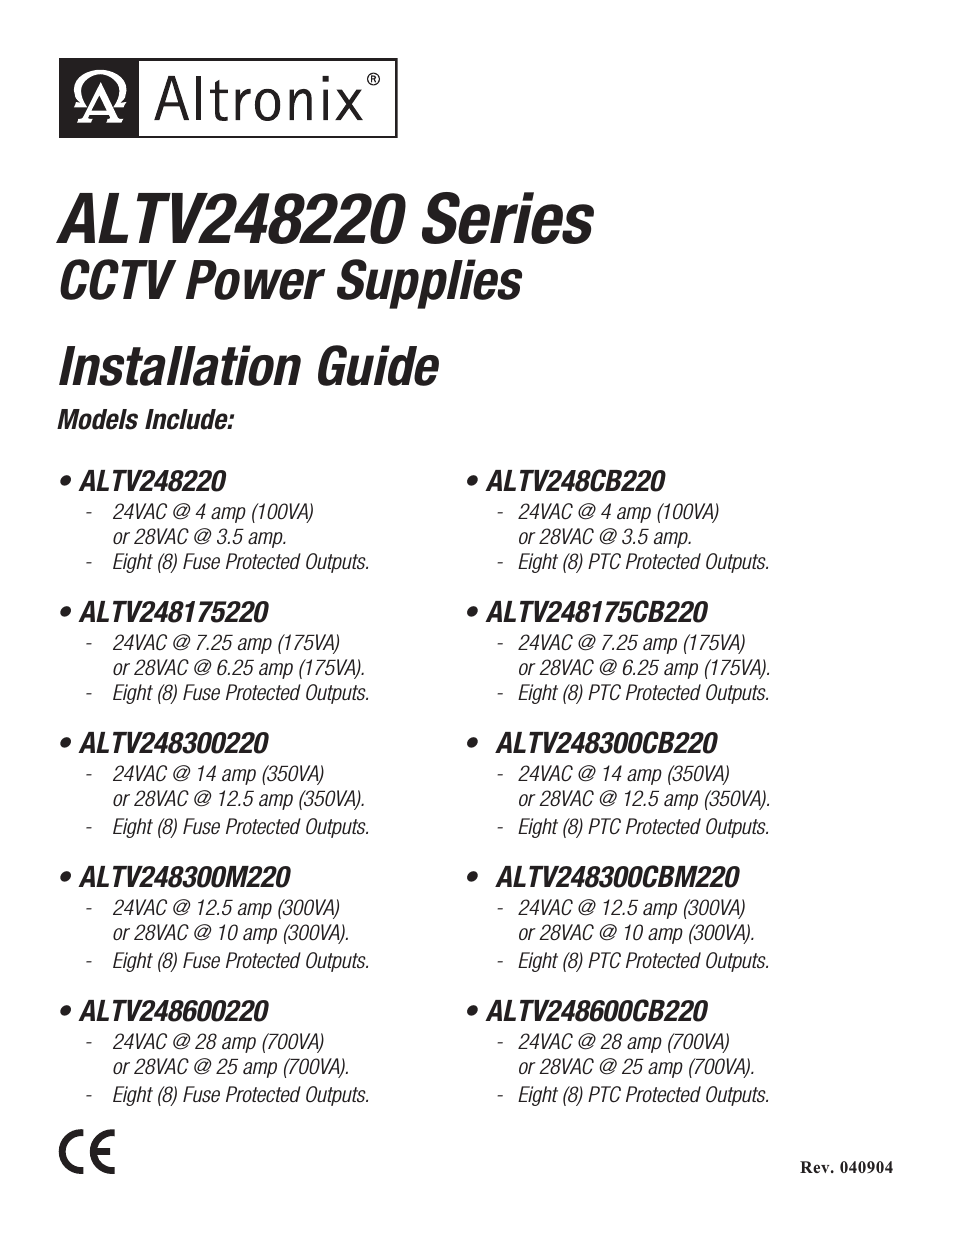 ALTV248220 Series Installation Instructions